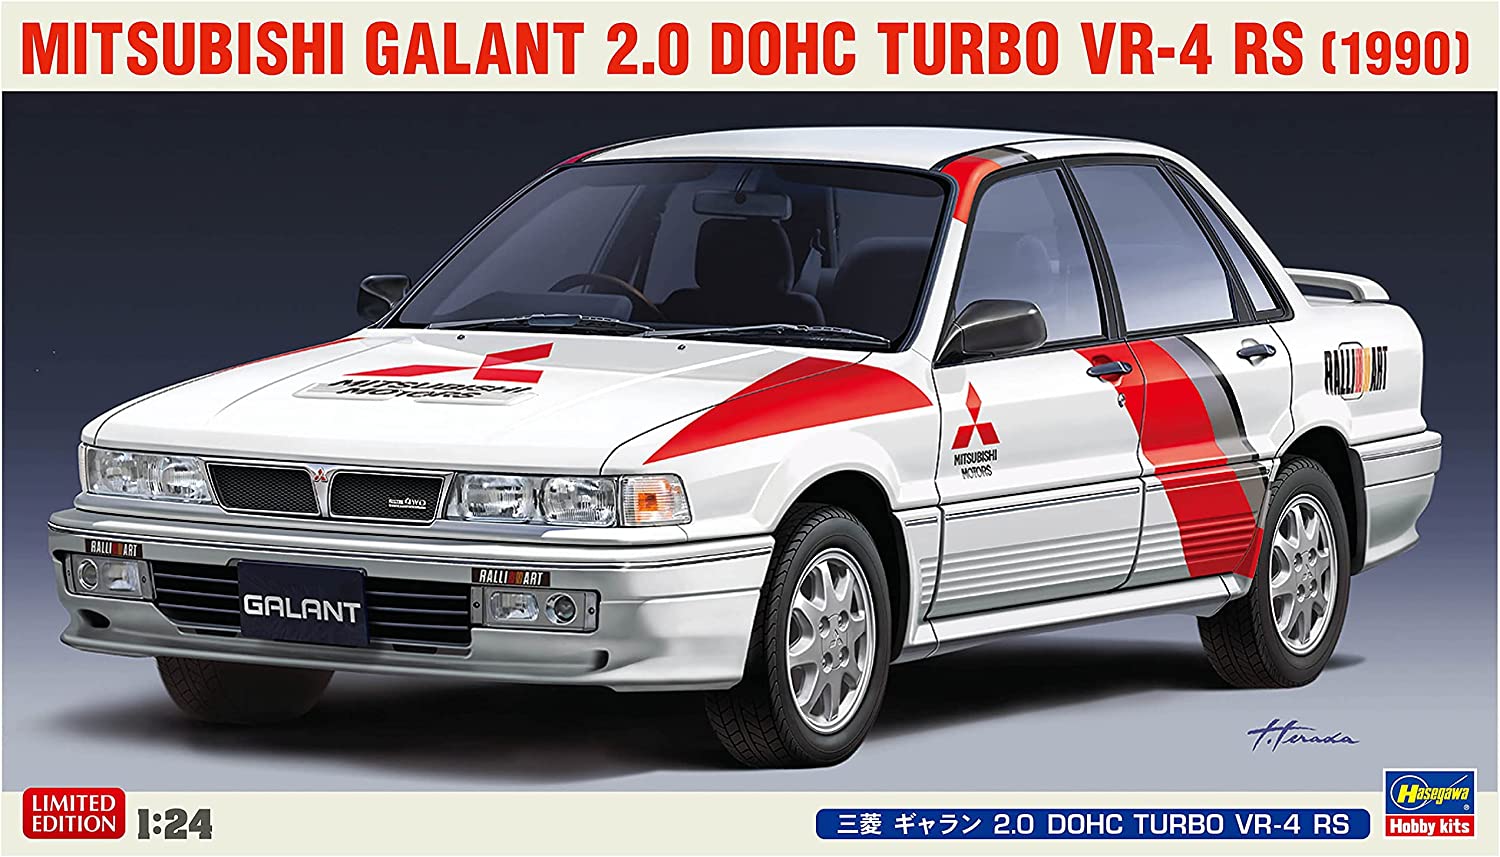 Mitsubishi Galant 2.0 DOHC Turbo VR-4 RS